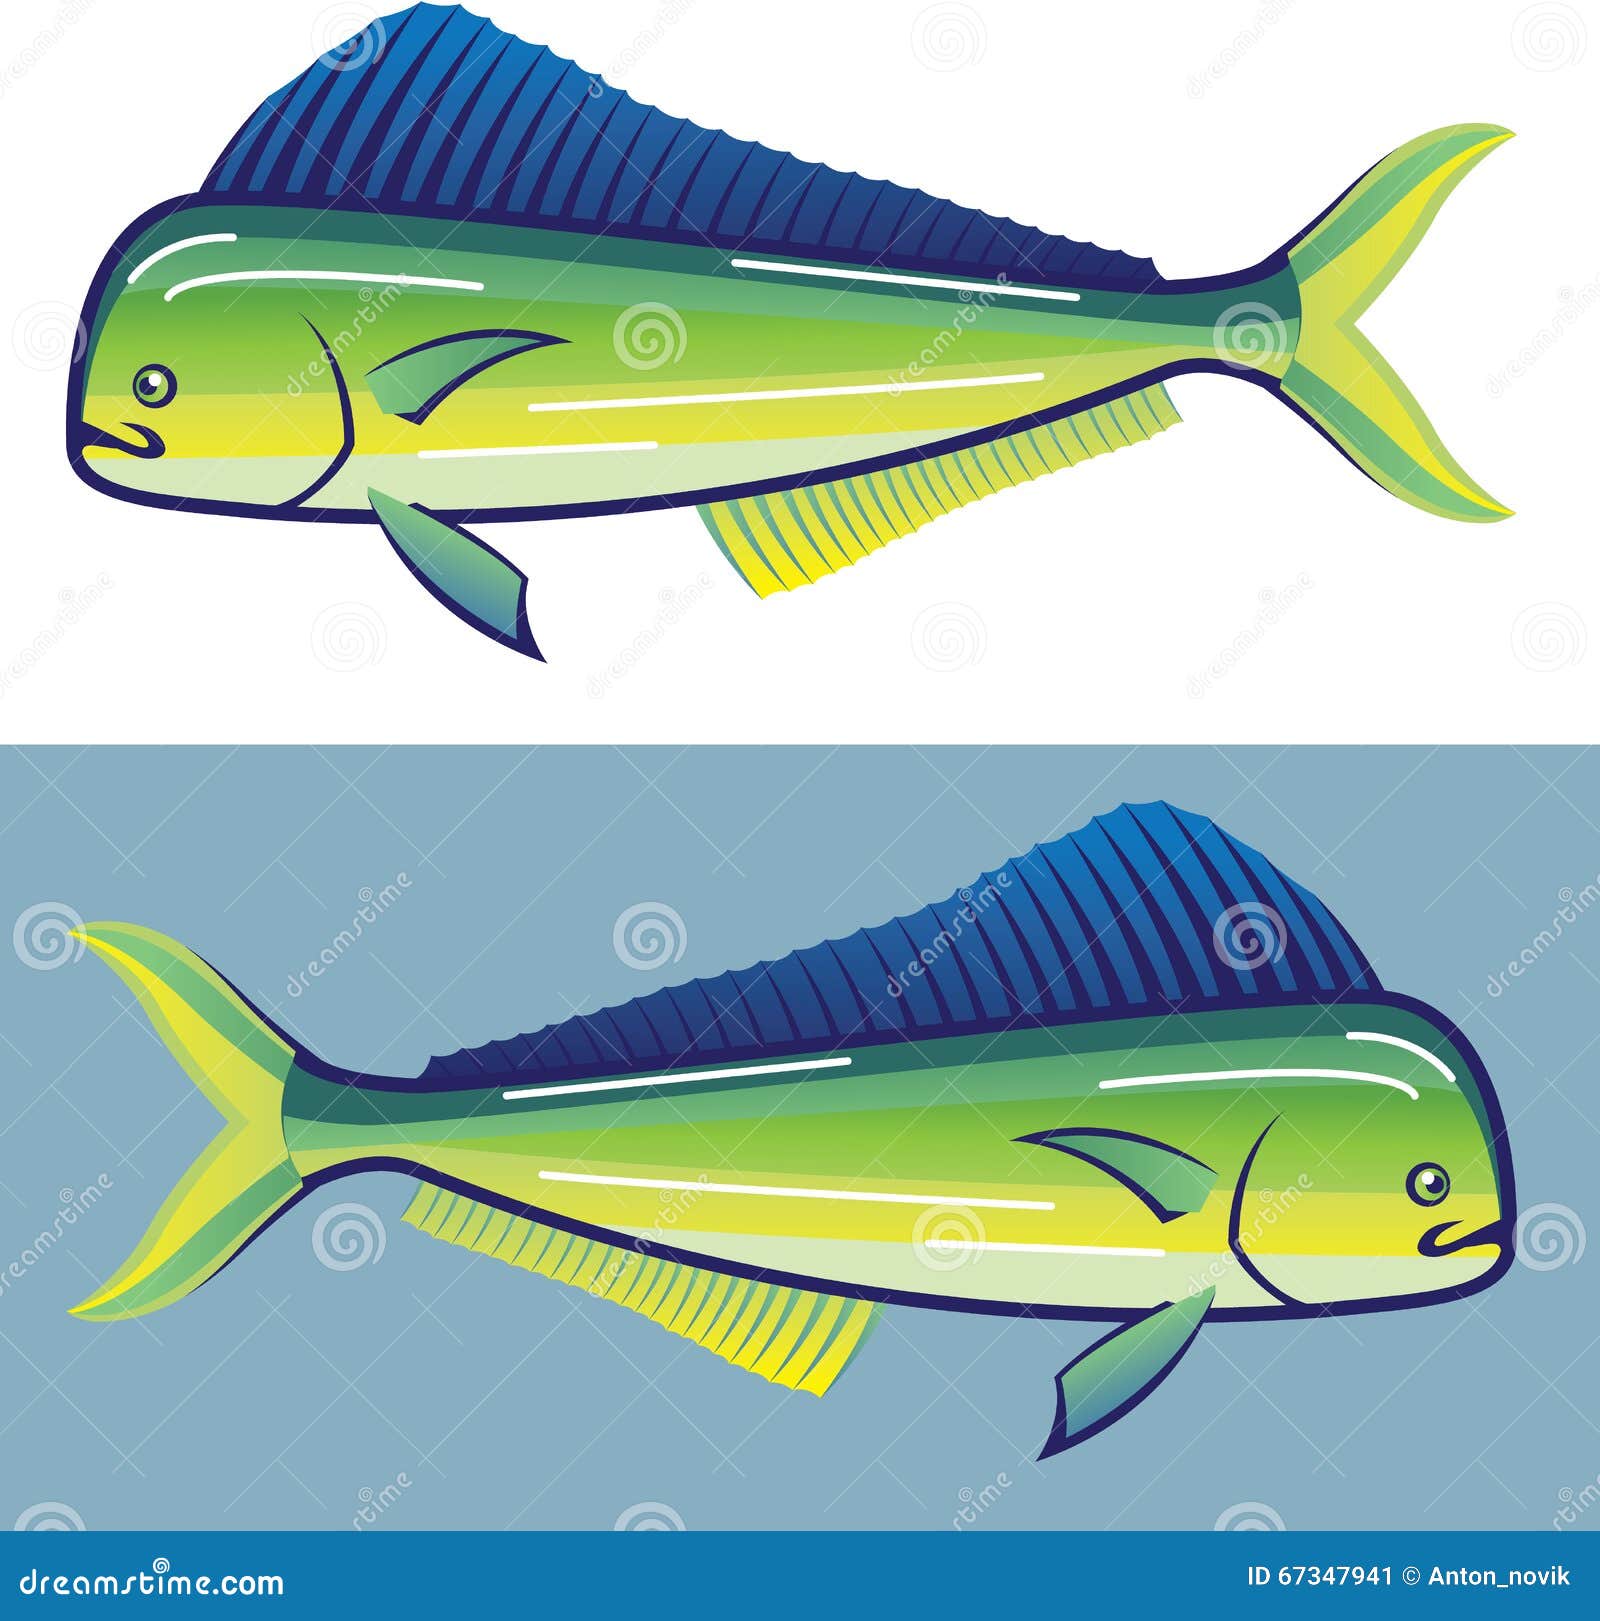 fish clip art eps file - photo #42